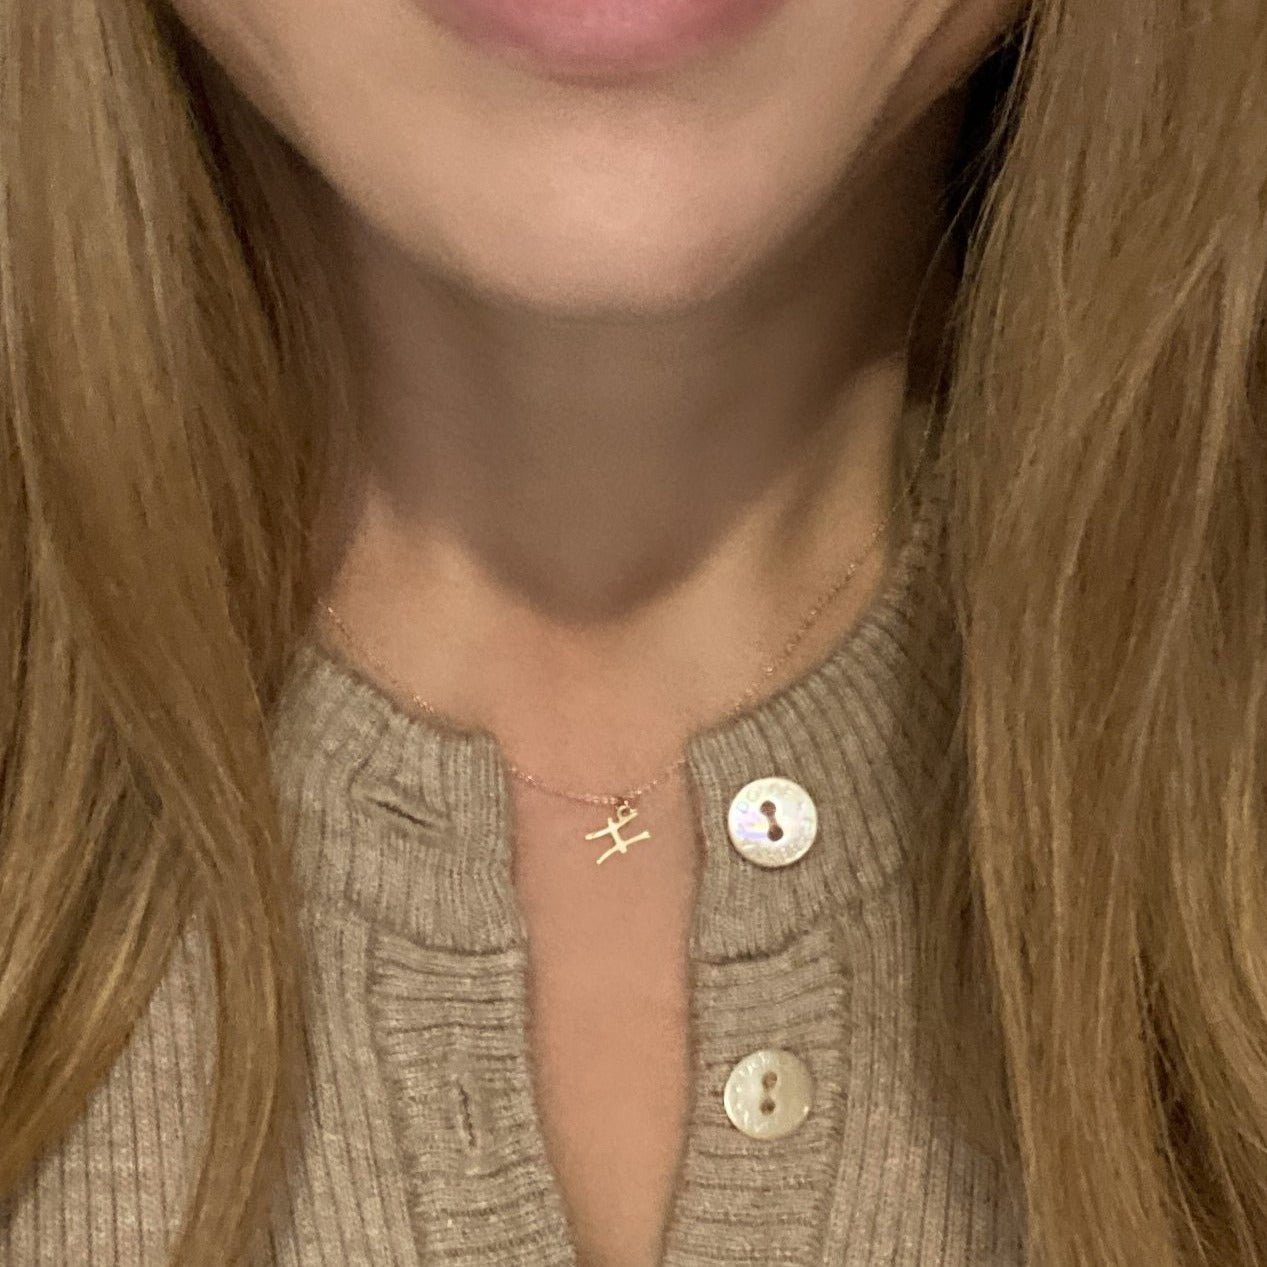 Pisces Sign Zodiac Necklace in 14k Gold - Mazi New York-jewelry